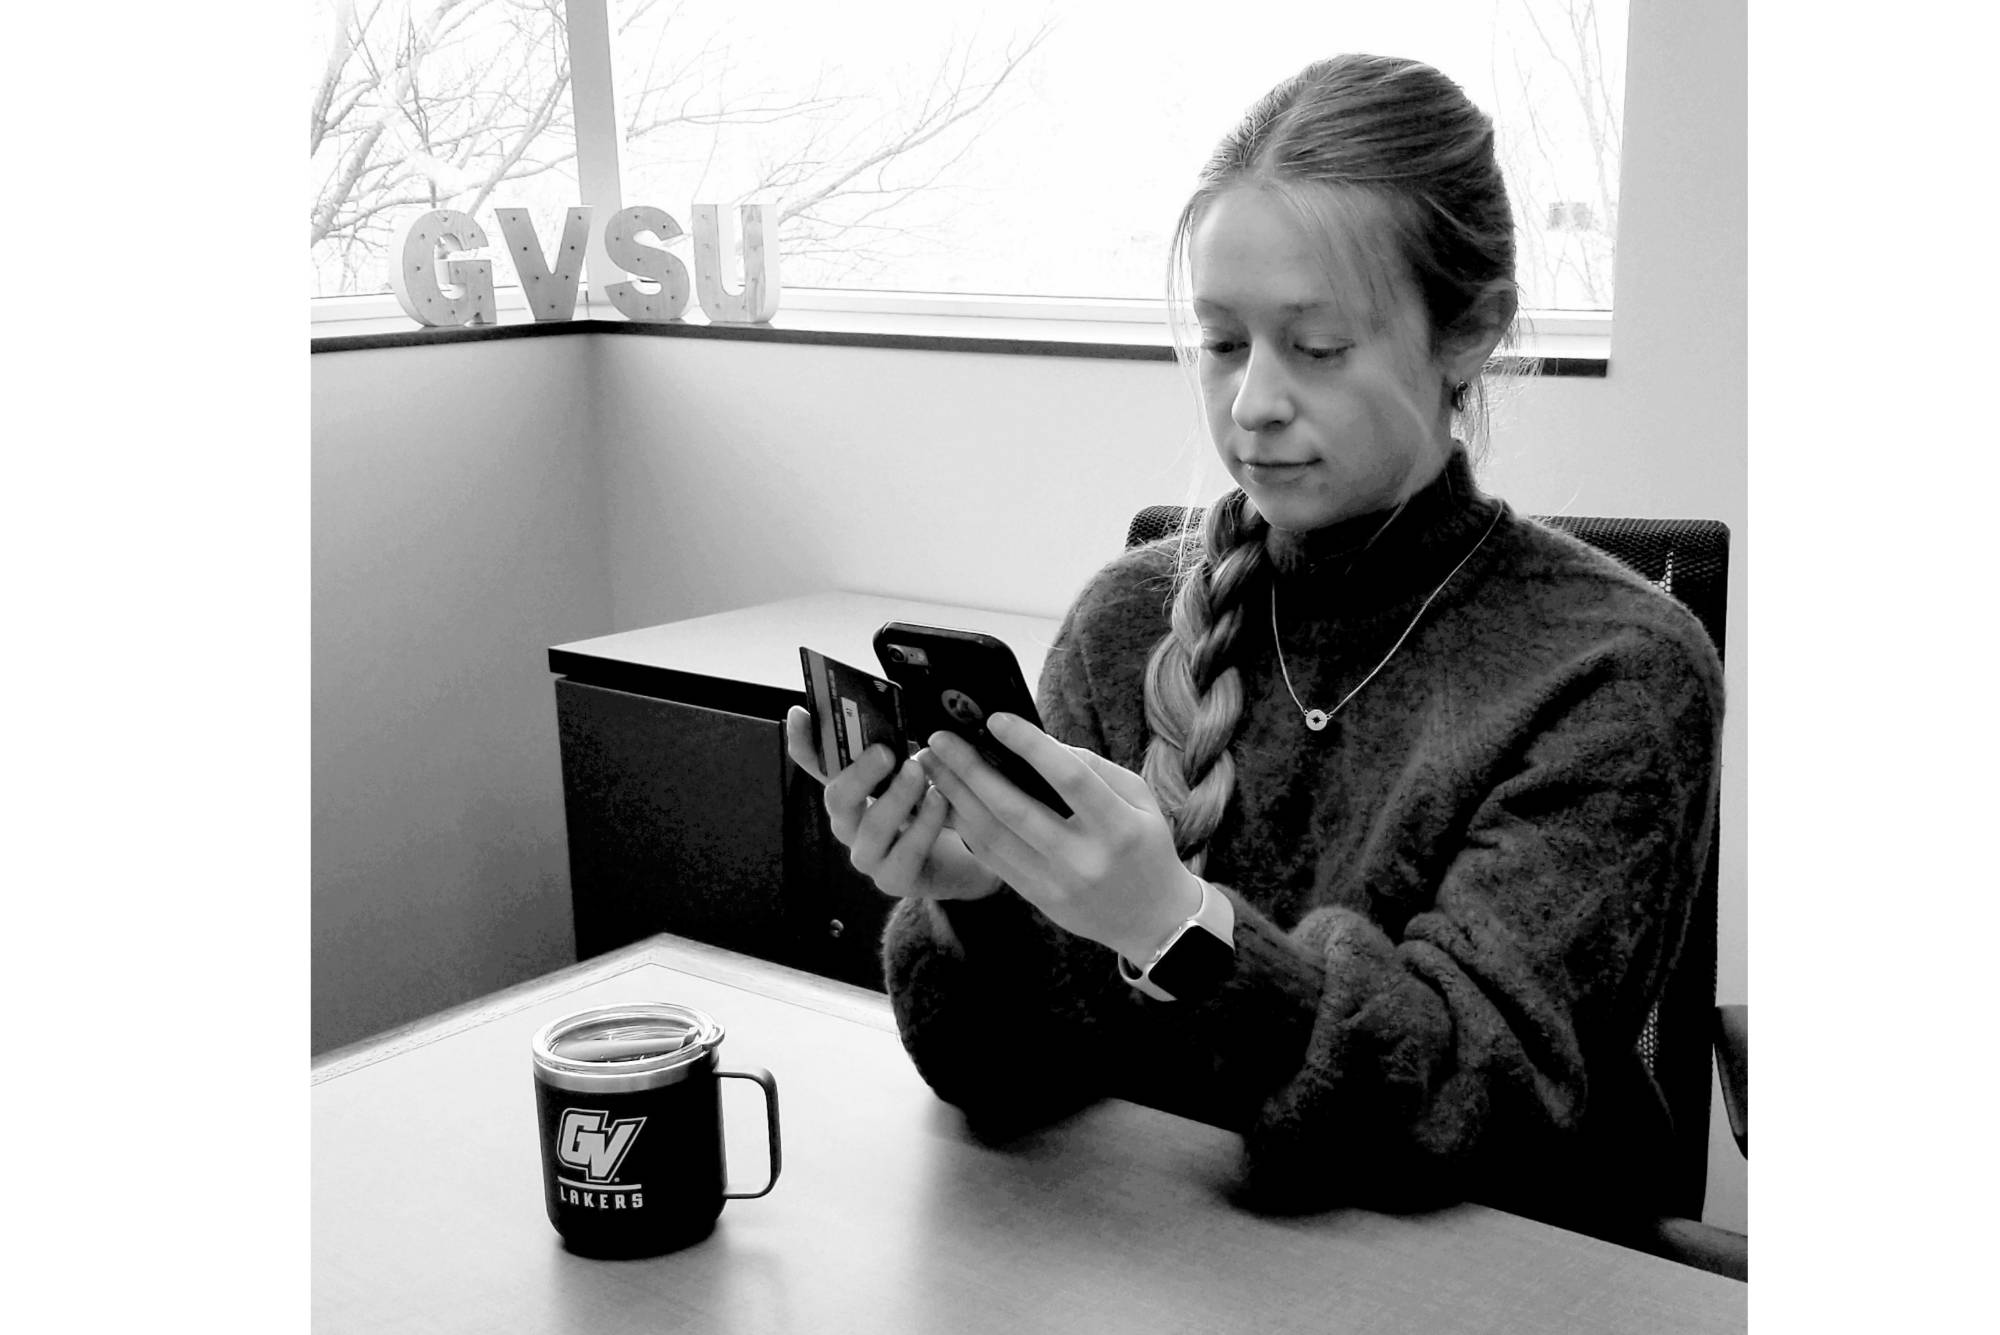 GVSU Student sitting at desk doing a cashless transaction on mobile phone with GVSU coffee mug on desk